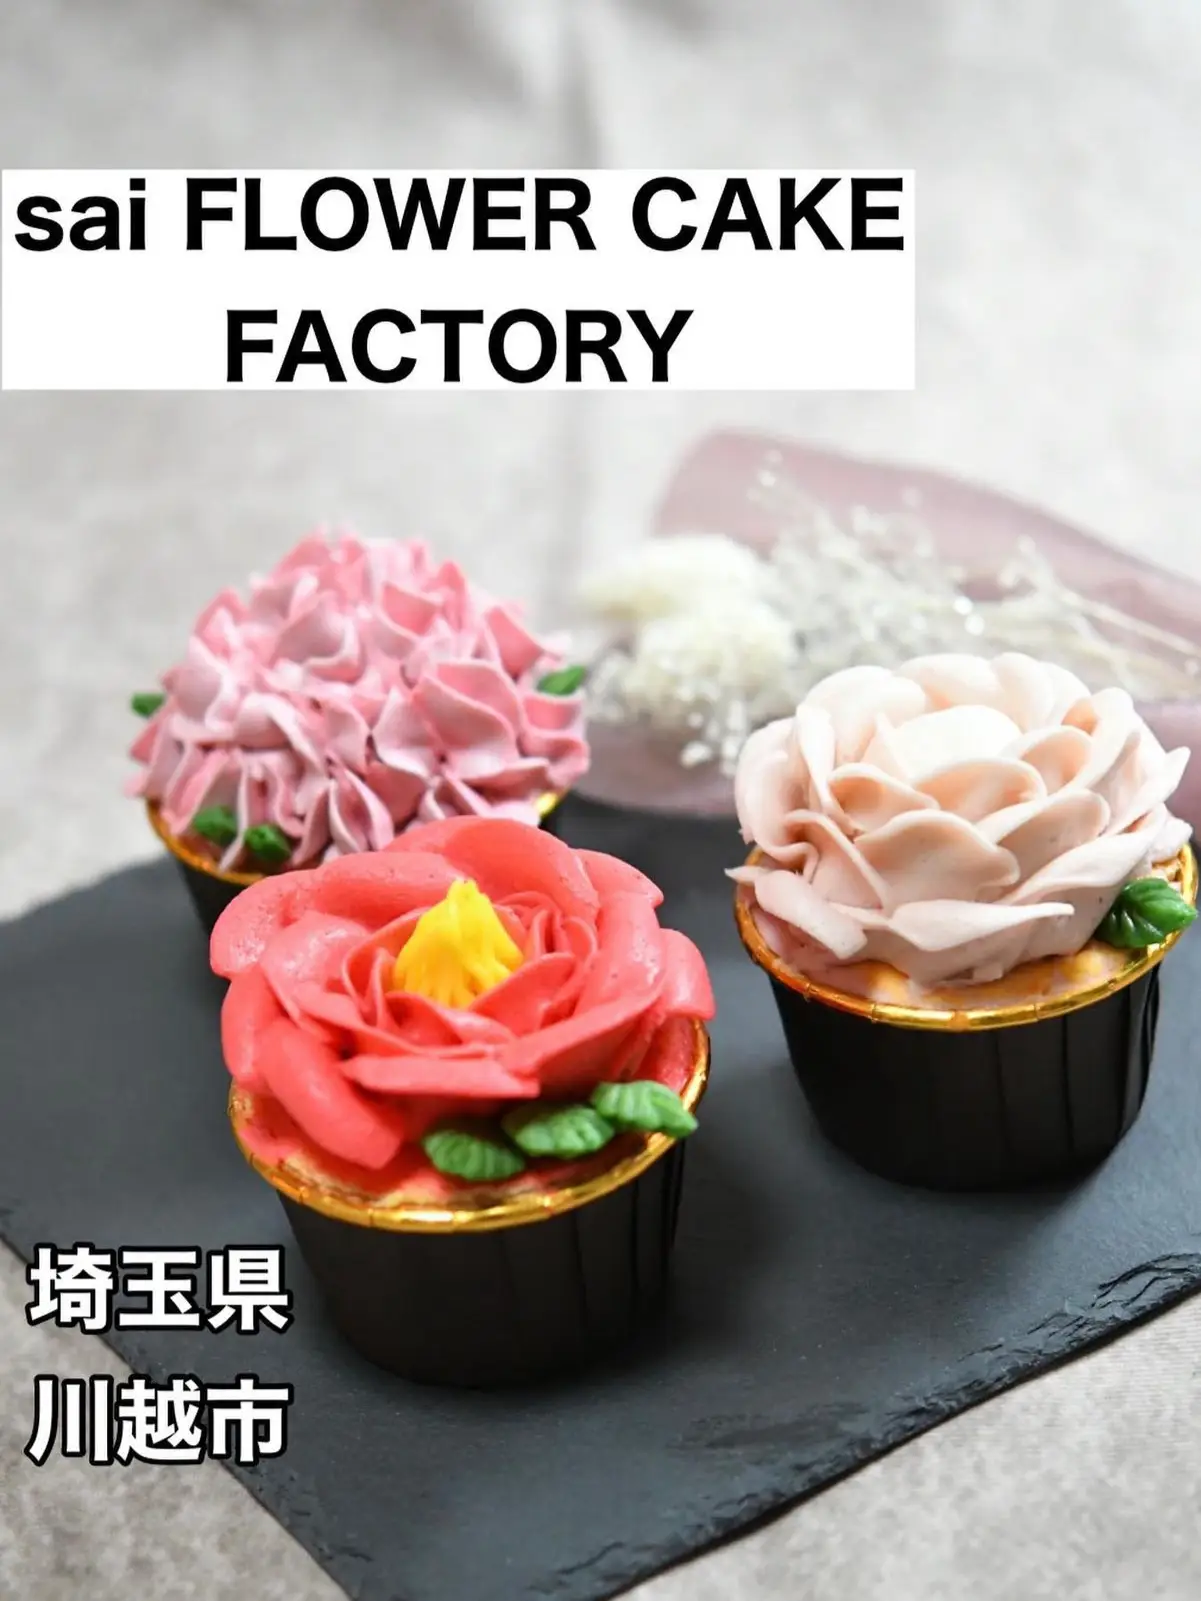 Cake Factory rose